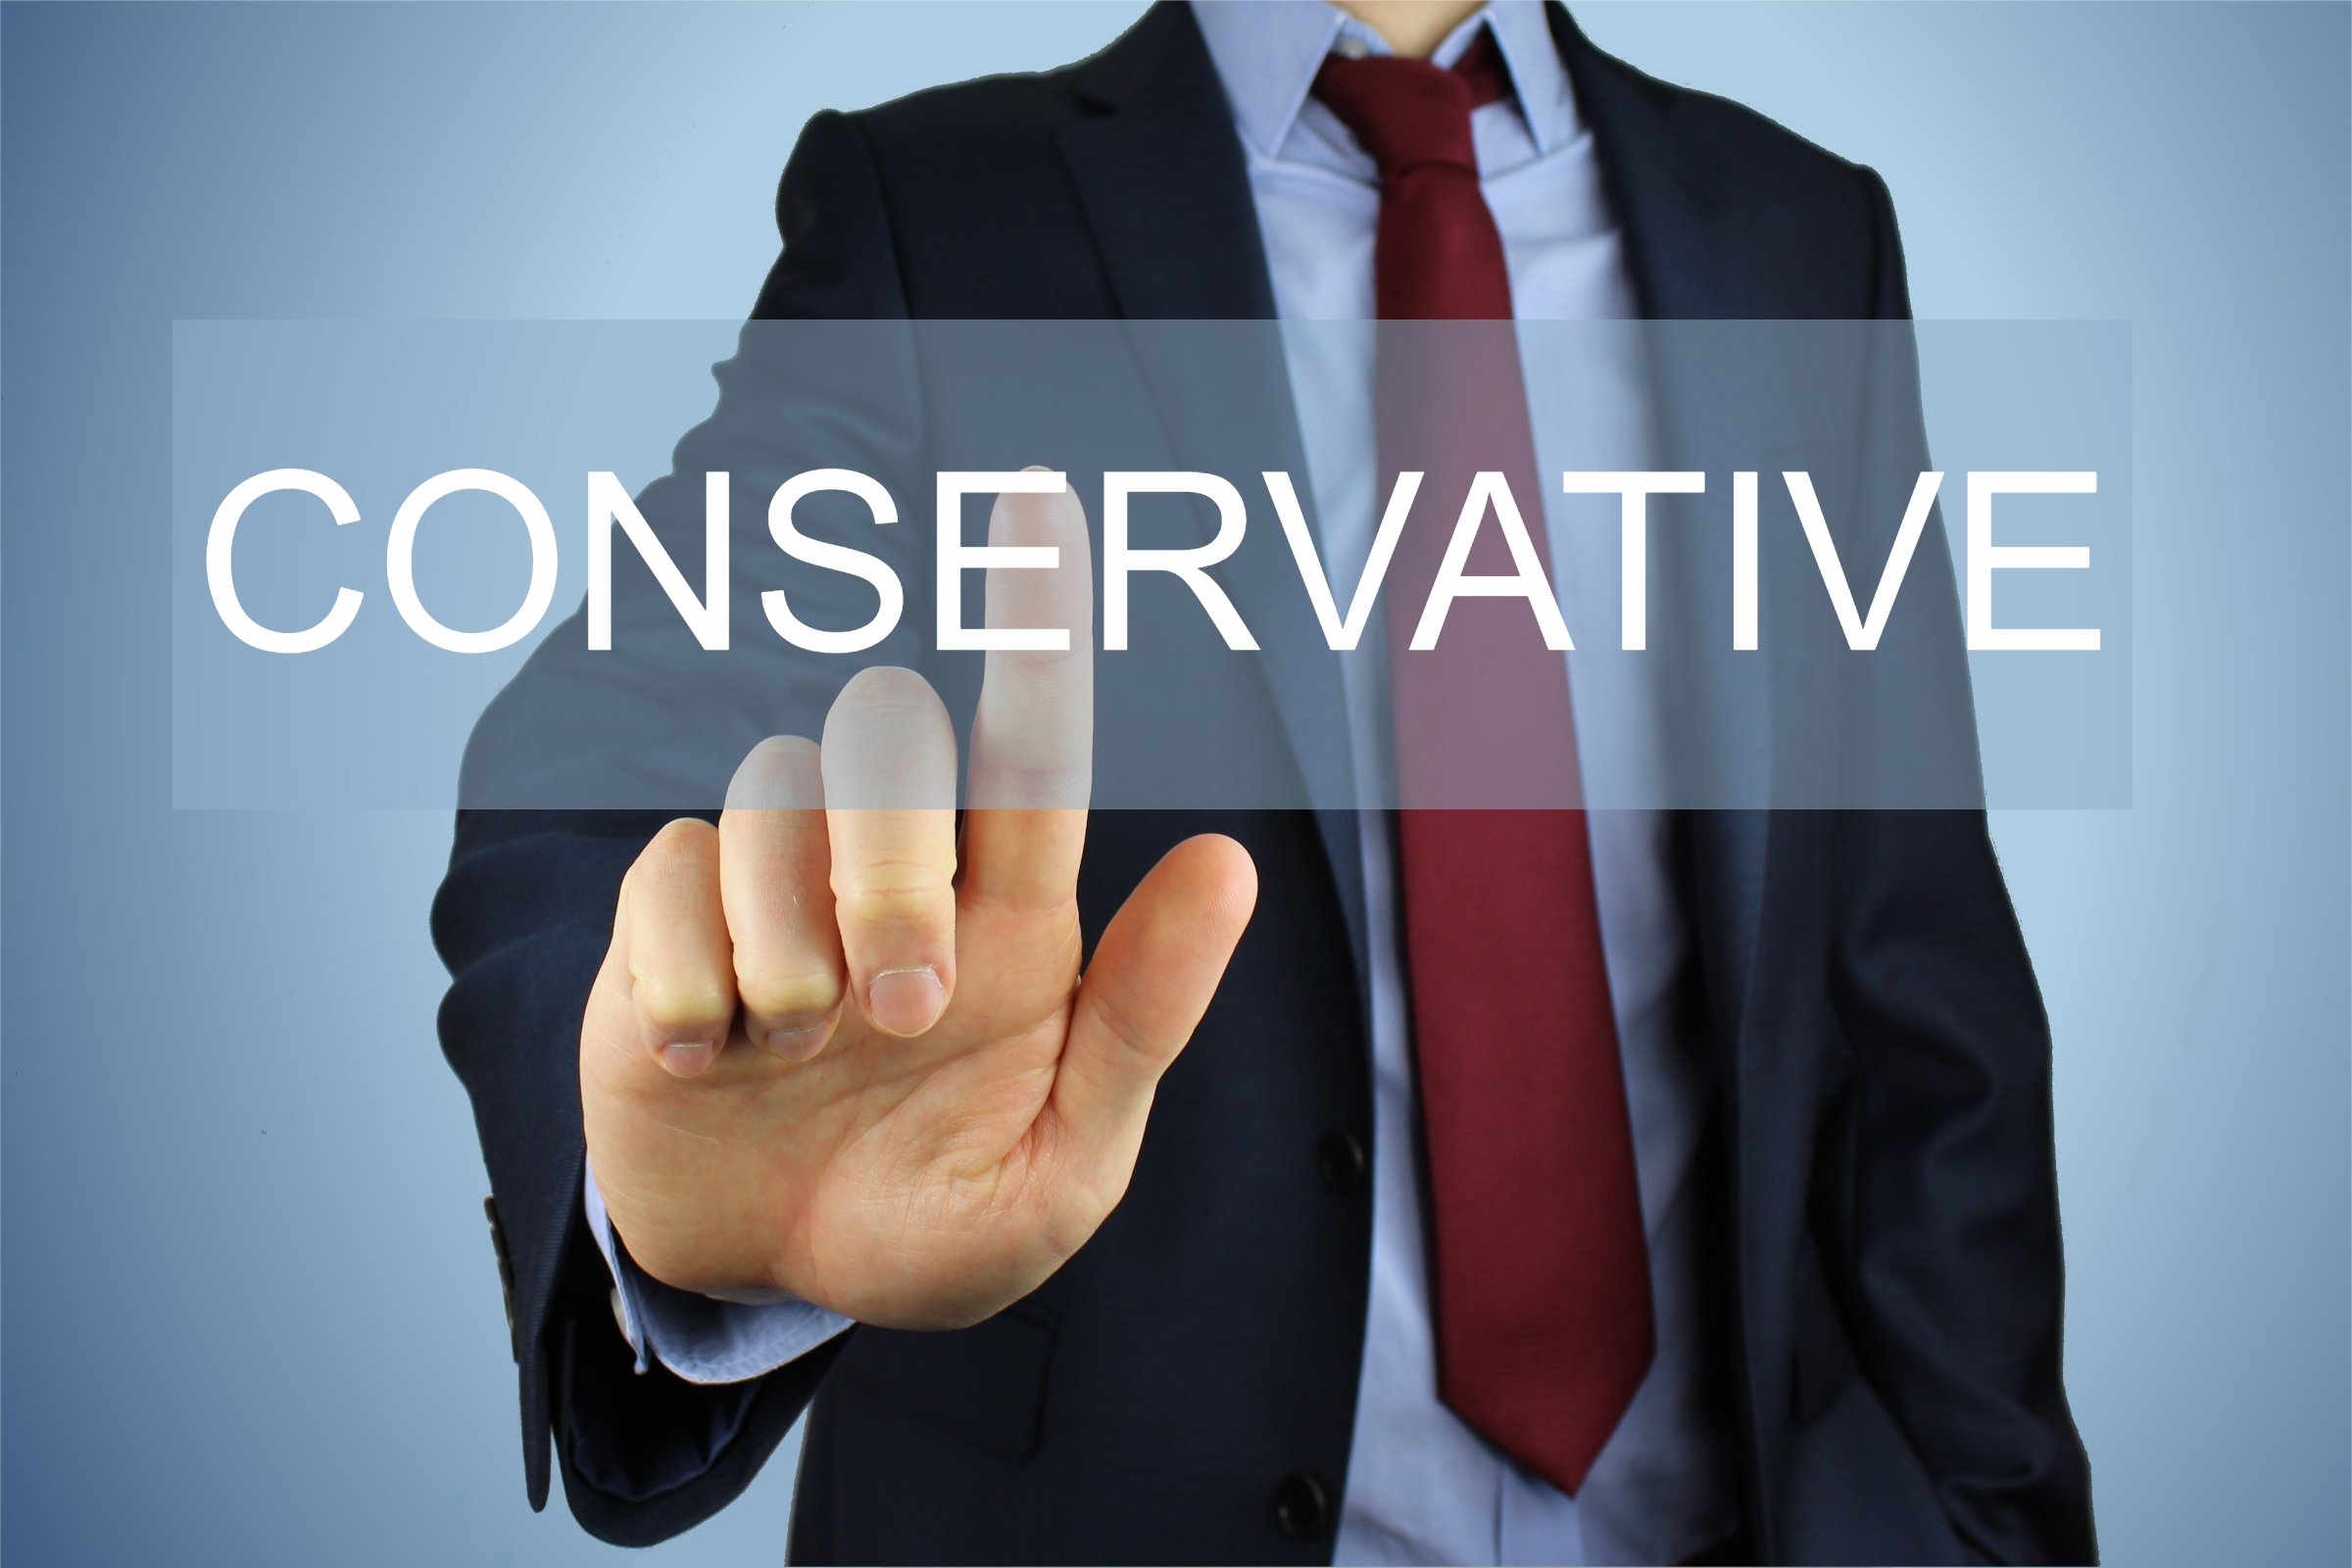 O que significa conservative?